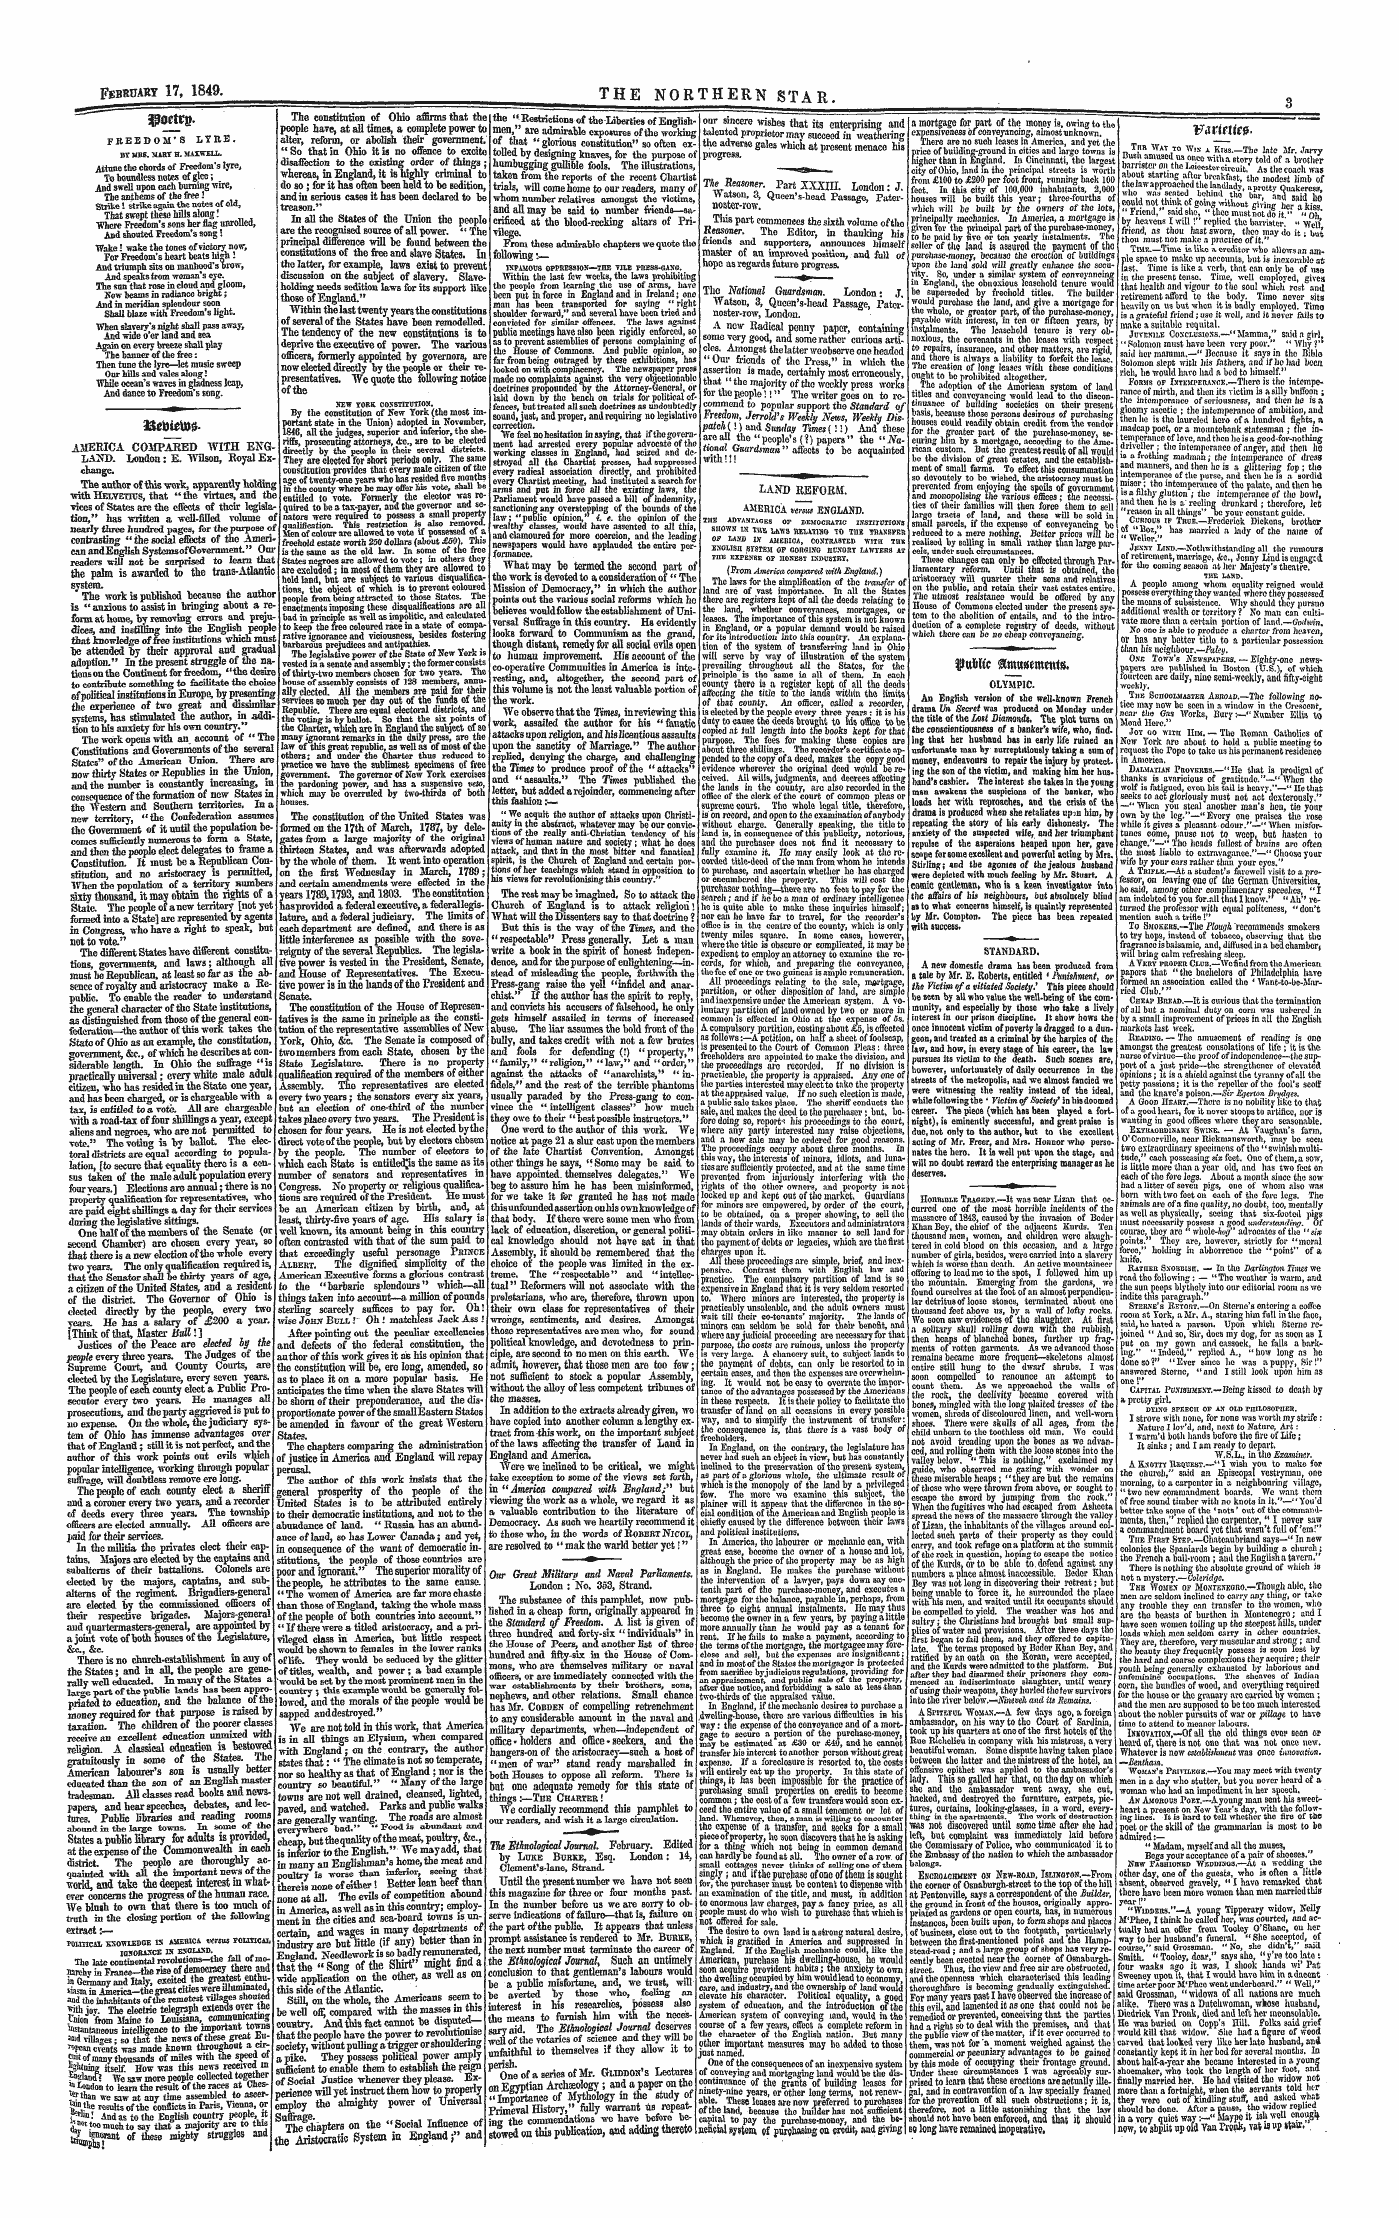 Northern Star (1837-1852): jS F Y, 1st edition - 3&Bteto$-